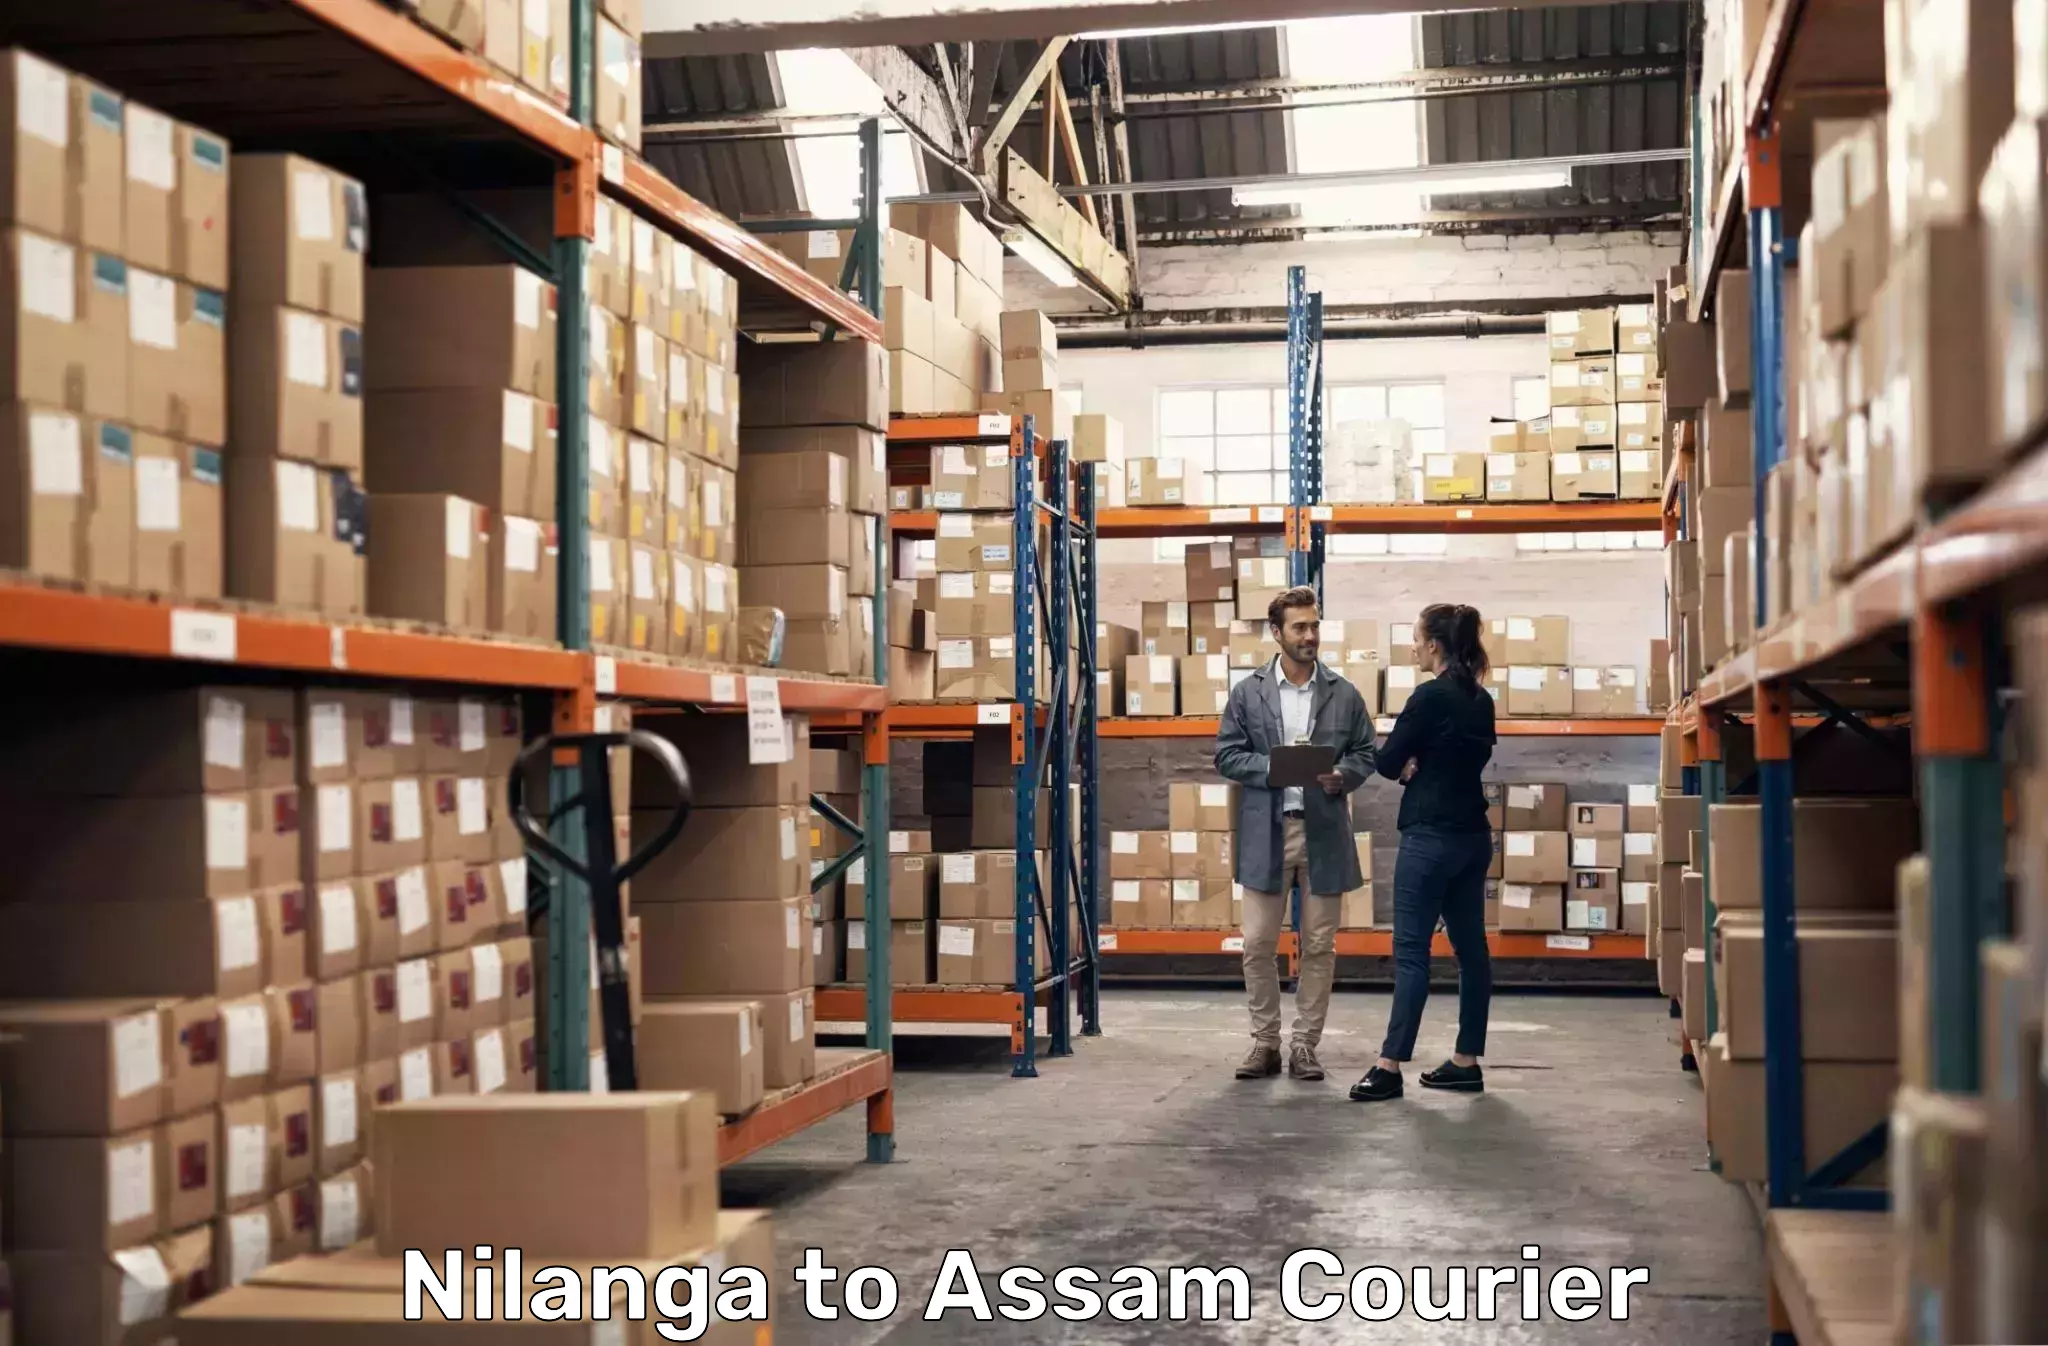 Courier service comparison Nilanga to Assam